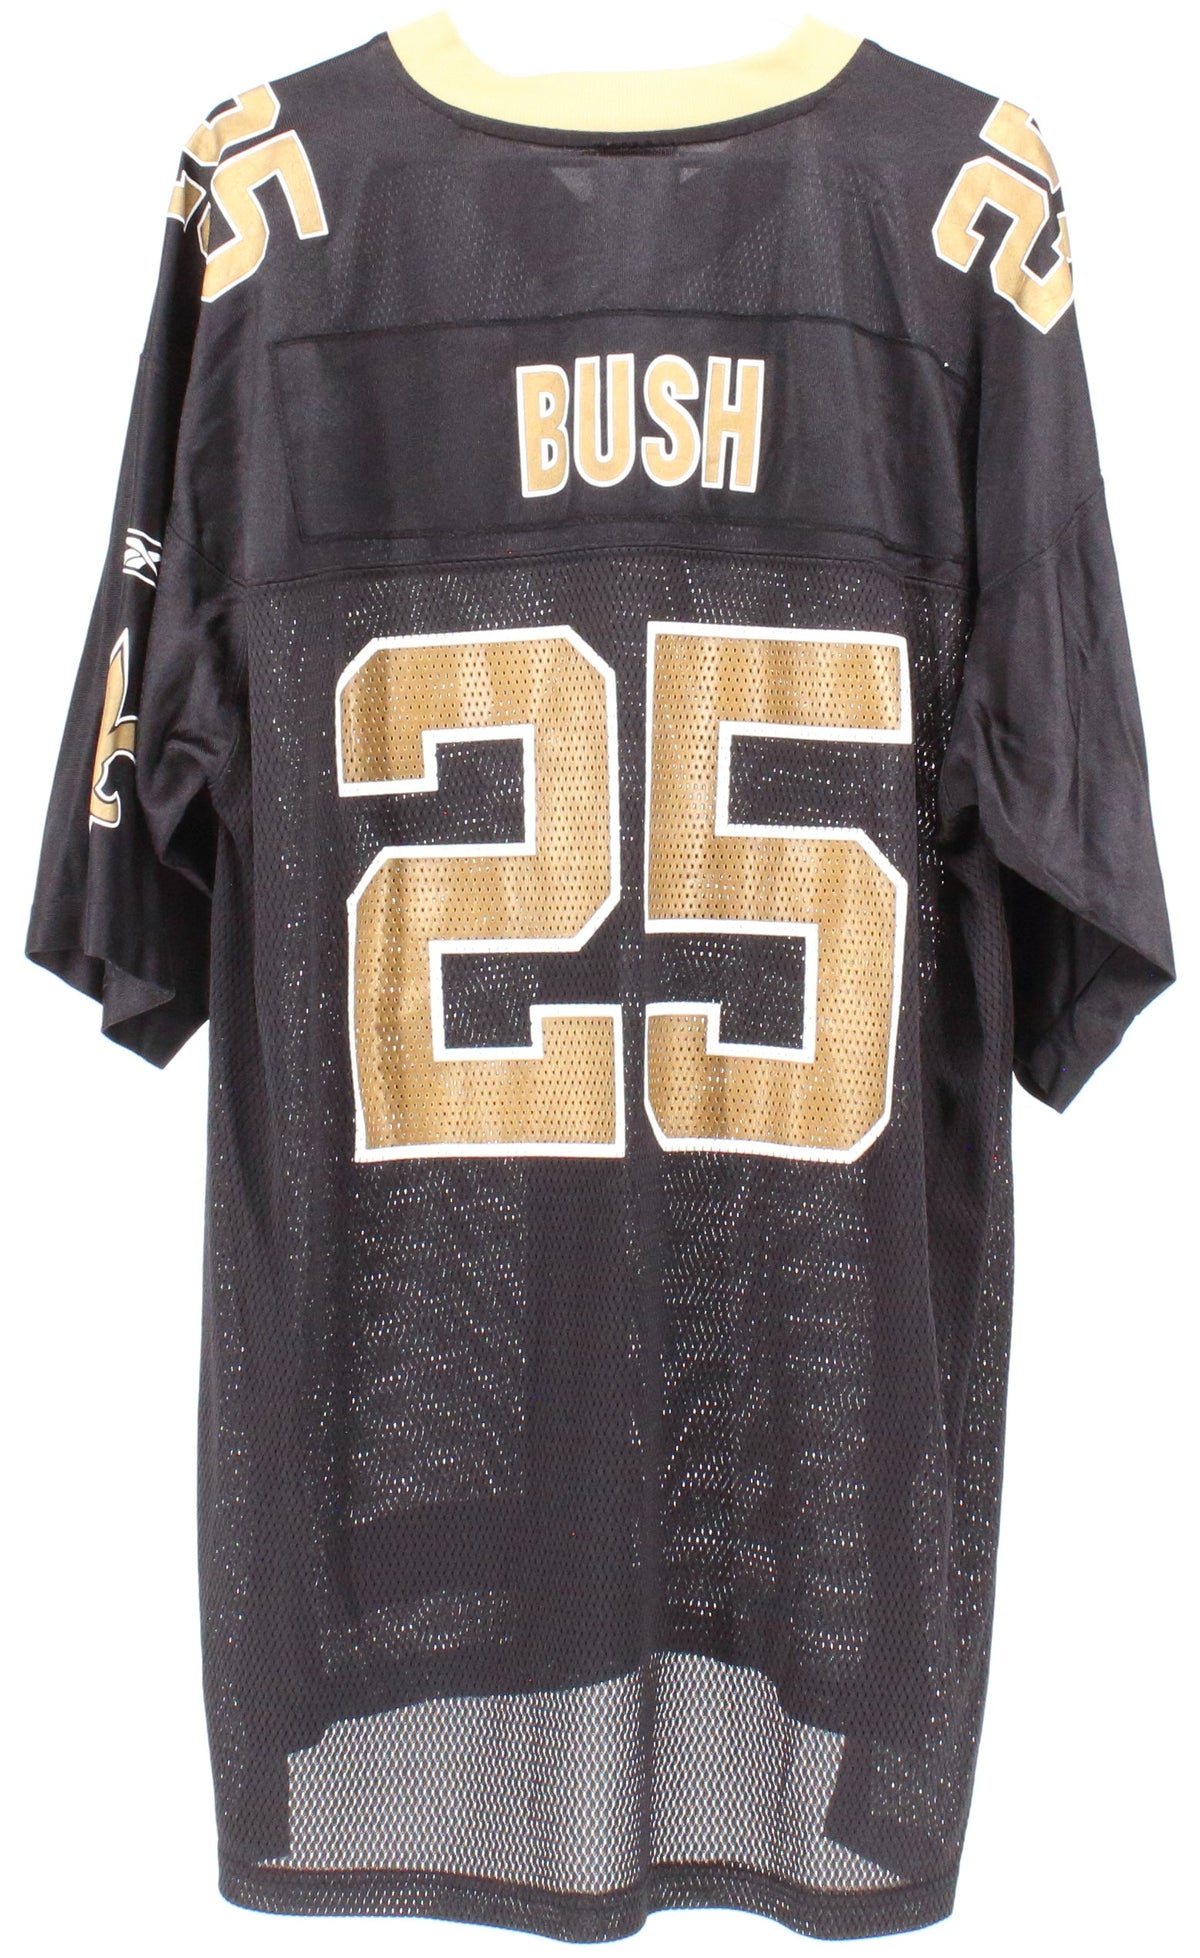 NFL Reebok Black & Gold No. 25 Bush Jersey